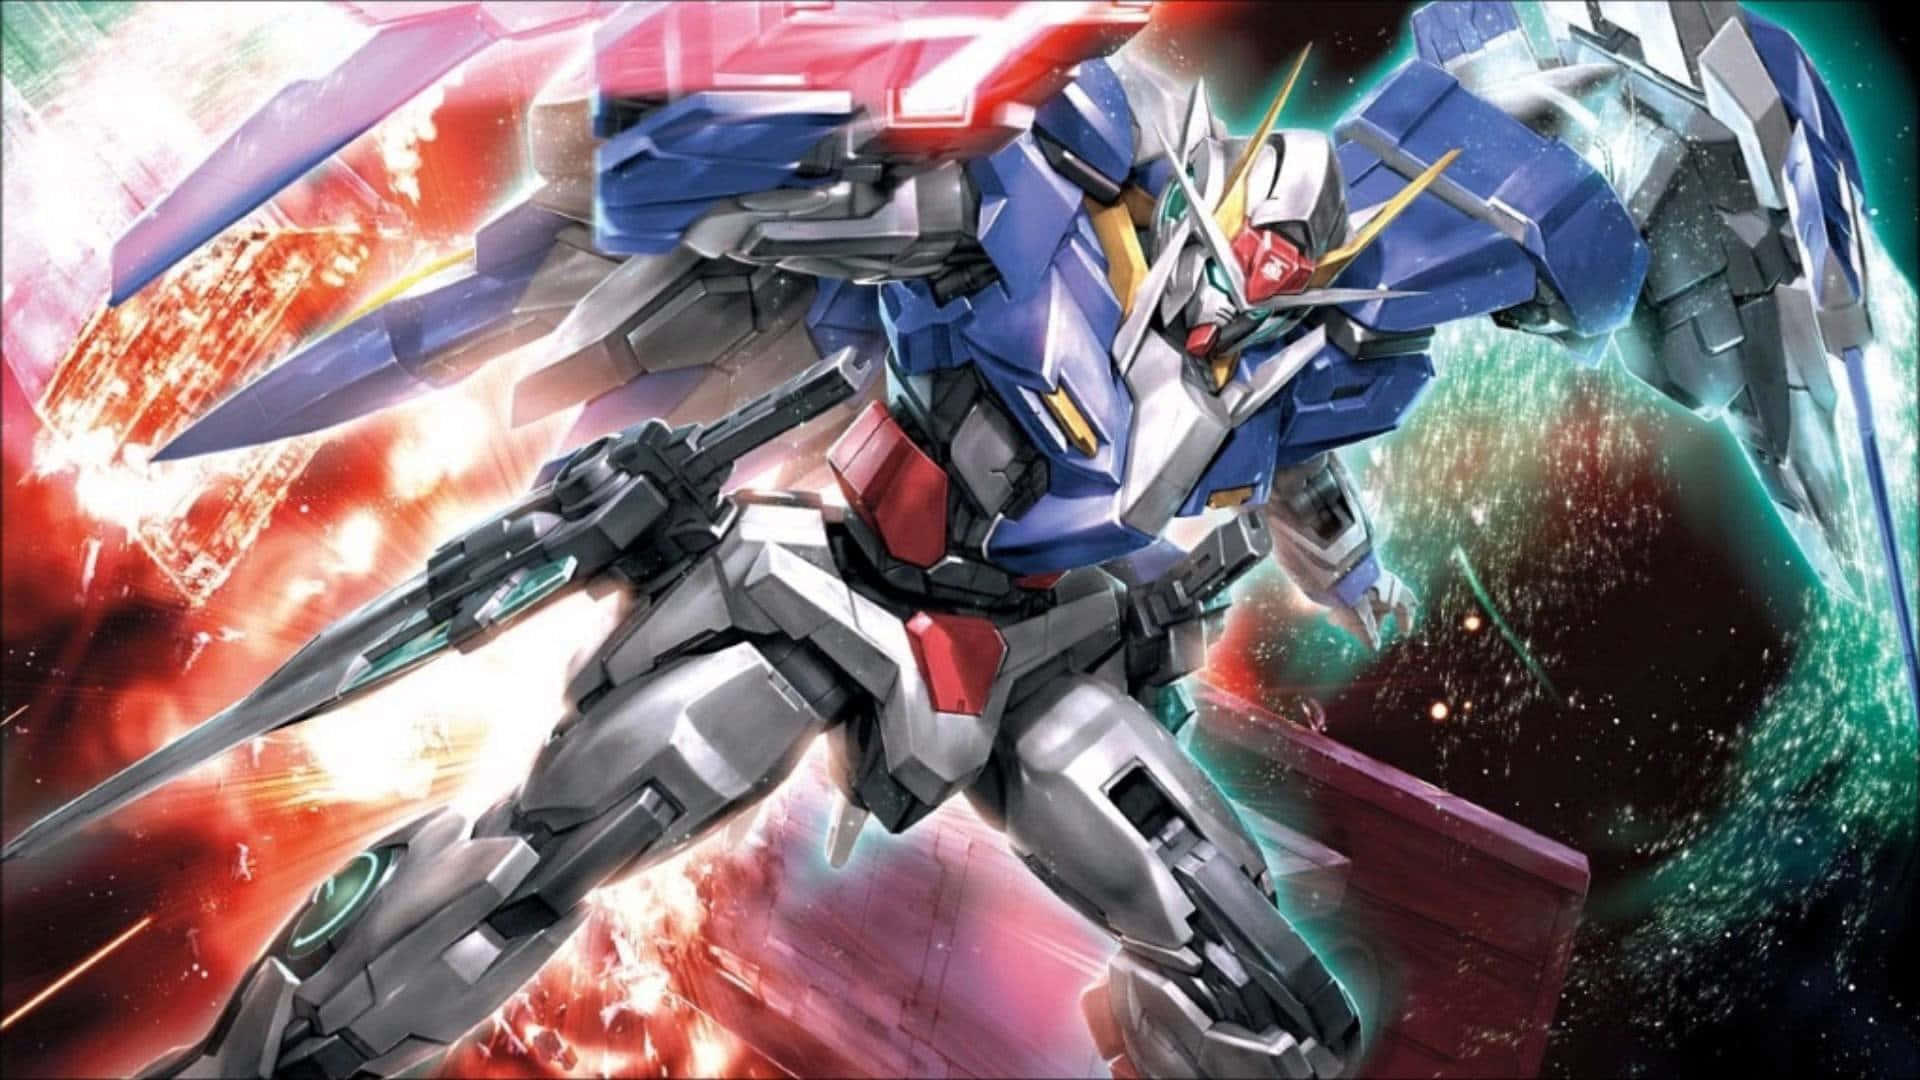 Densenaste Modellen I Gundam-serien - Rx-78-2!